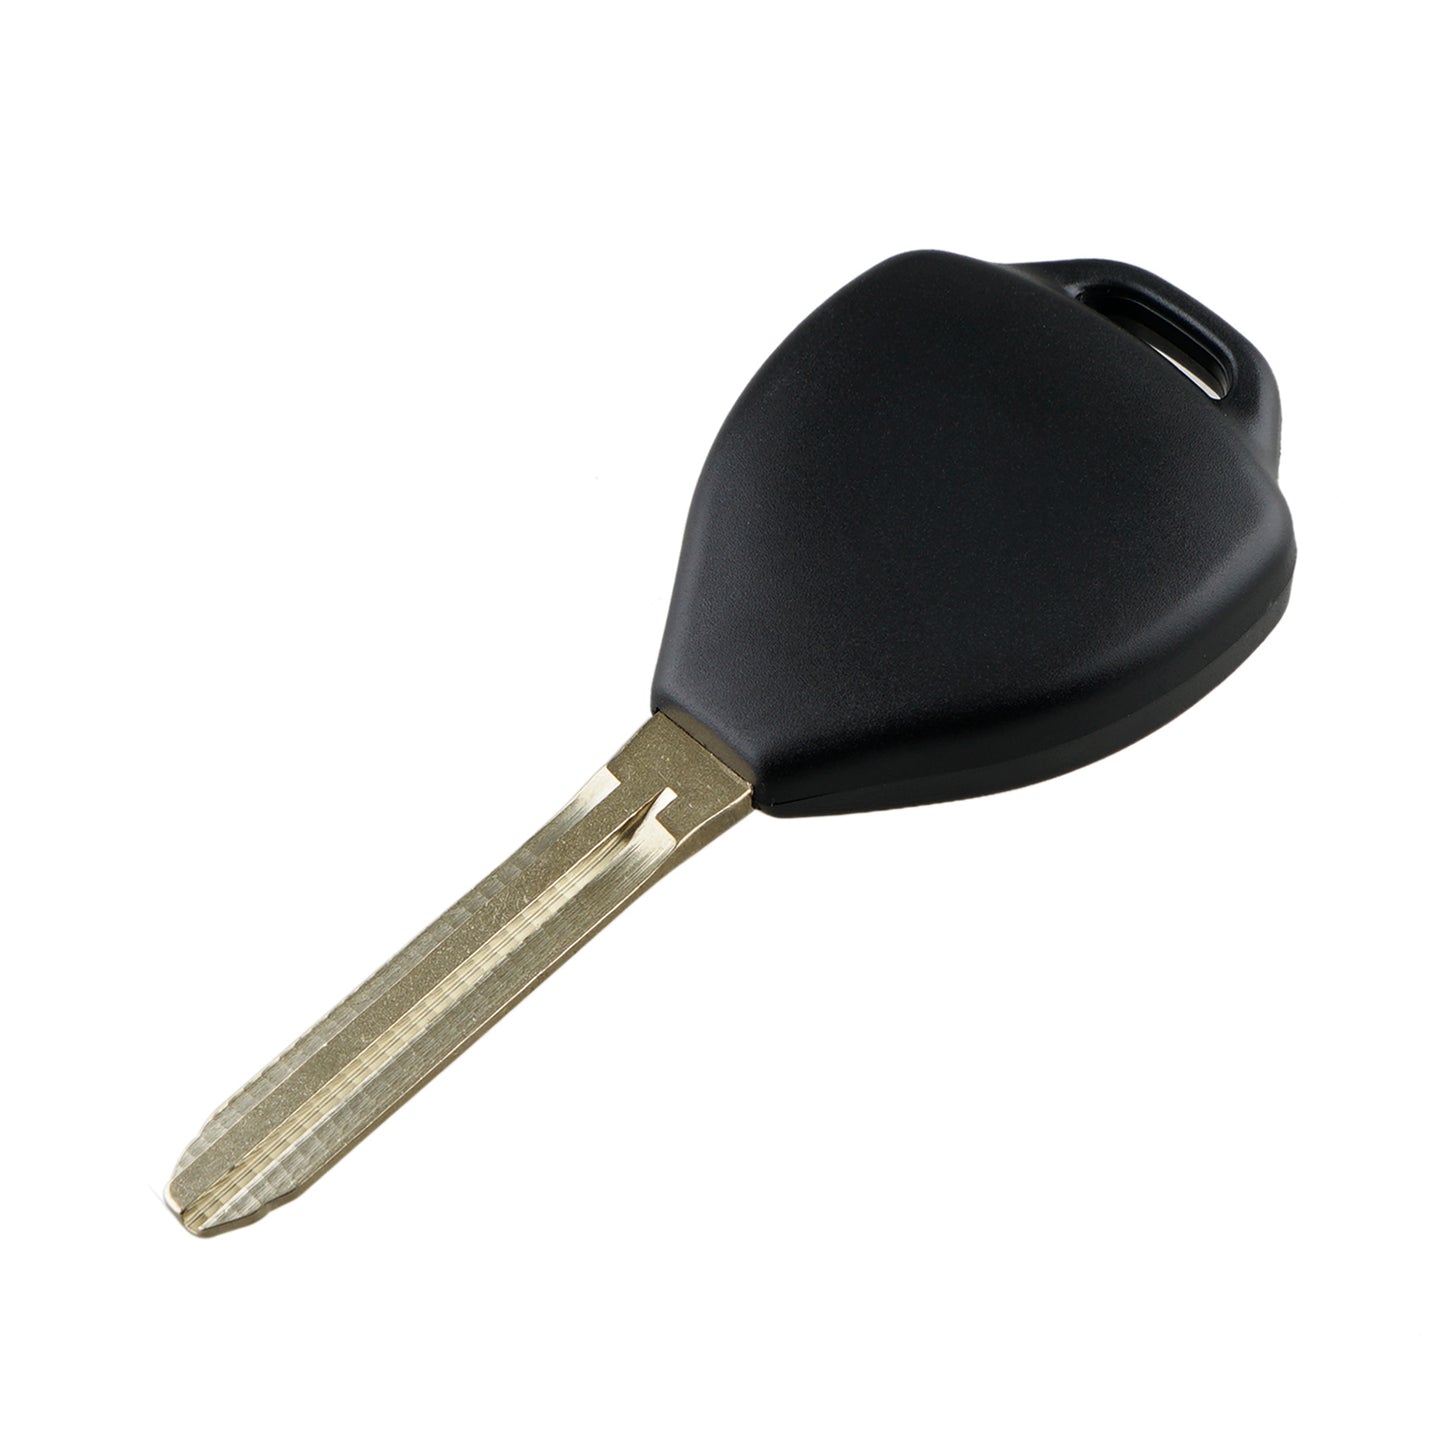 4 Buttons 314MHz Keyless Entry Fob Remote Car Key For 2010 - 2011 Toyota Camry FCC ID: HYQ12BBY HYQ12BDCSKU : J405